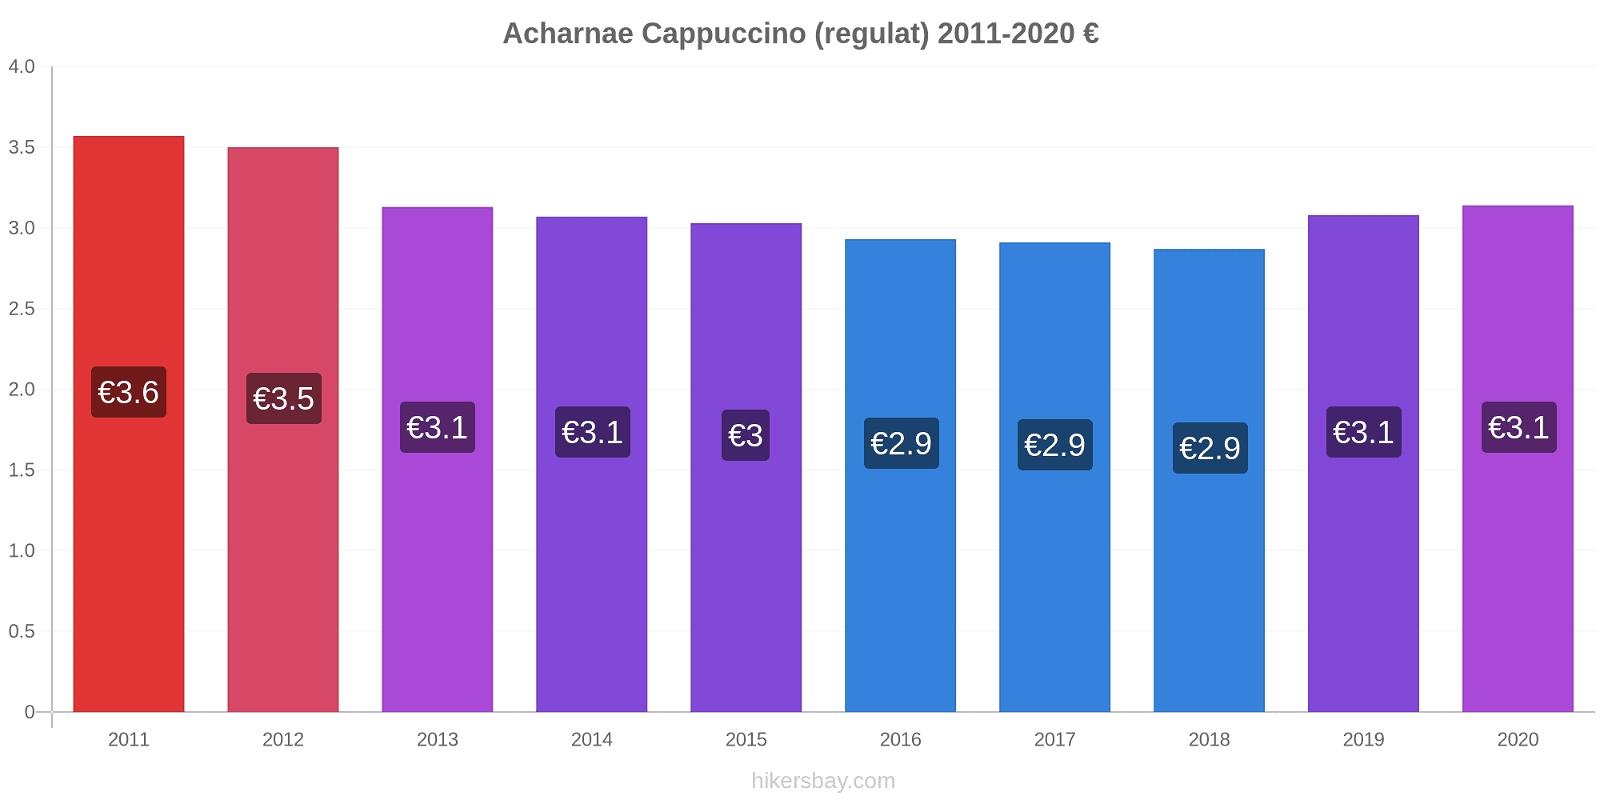 Acharnae modificări de preț Cappuccino (regulat) hikersbay.com